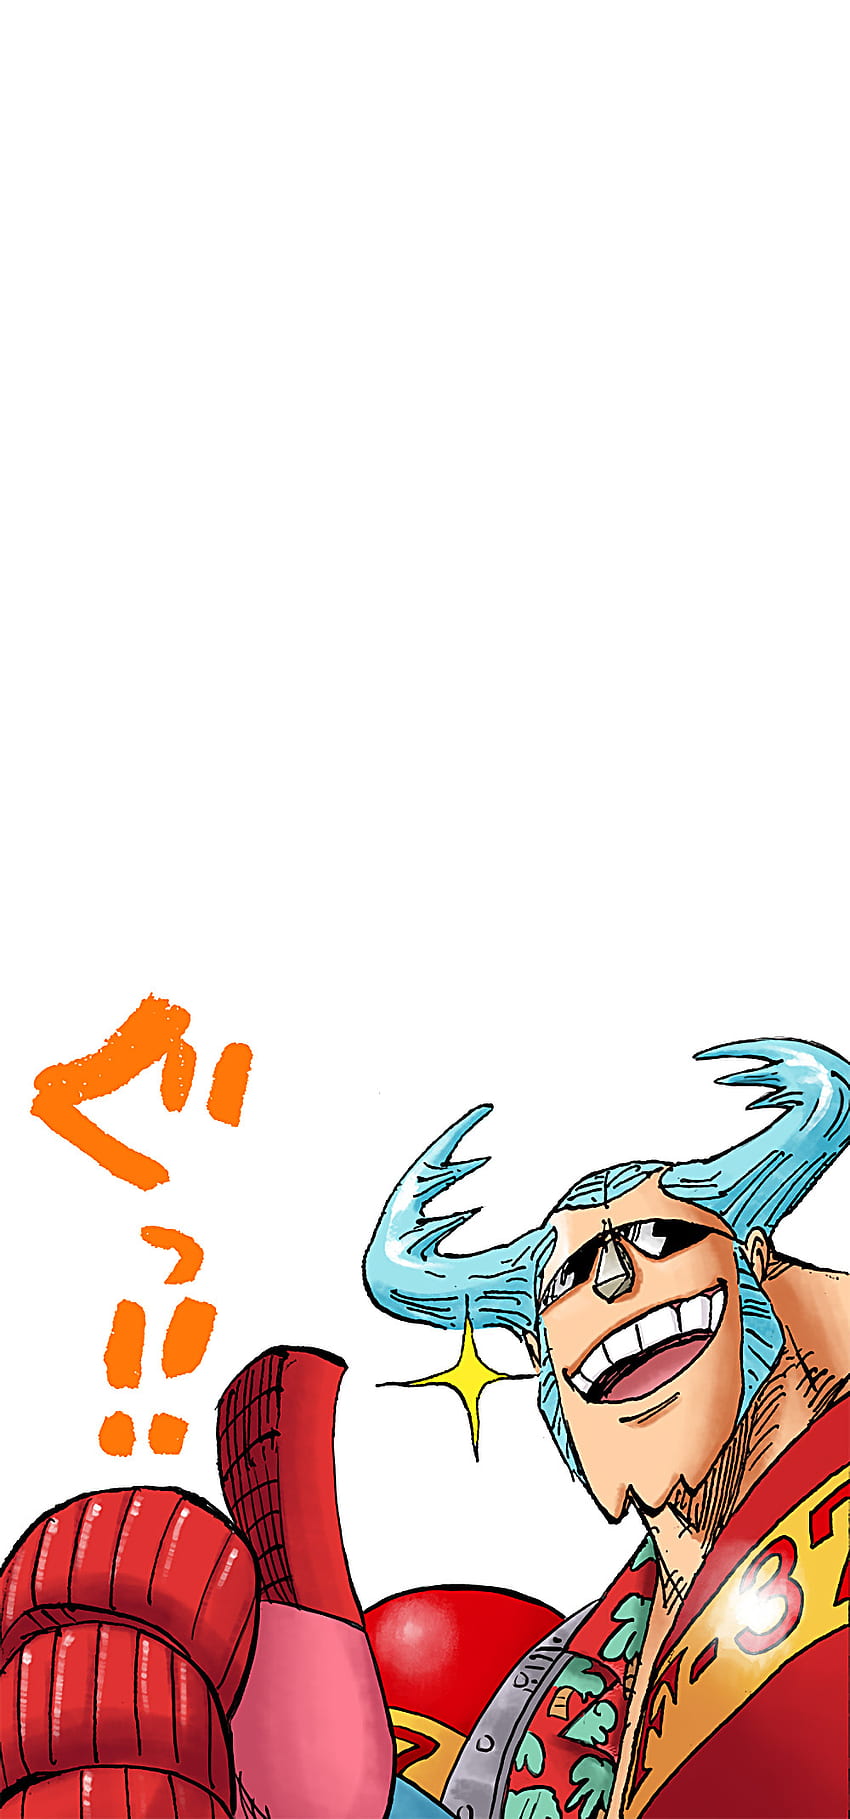 Franky  ONE PIECE  Mobile Wallpaper by Oda Eiichirou 2313044  Zerochan  Anime Image Board Mobile